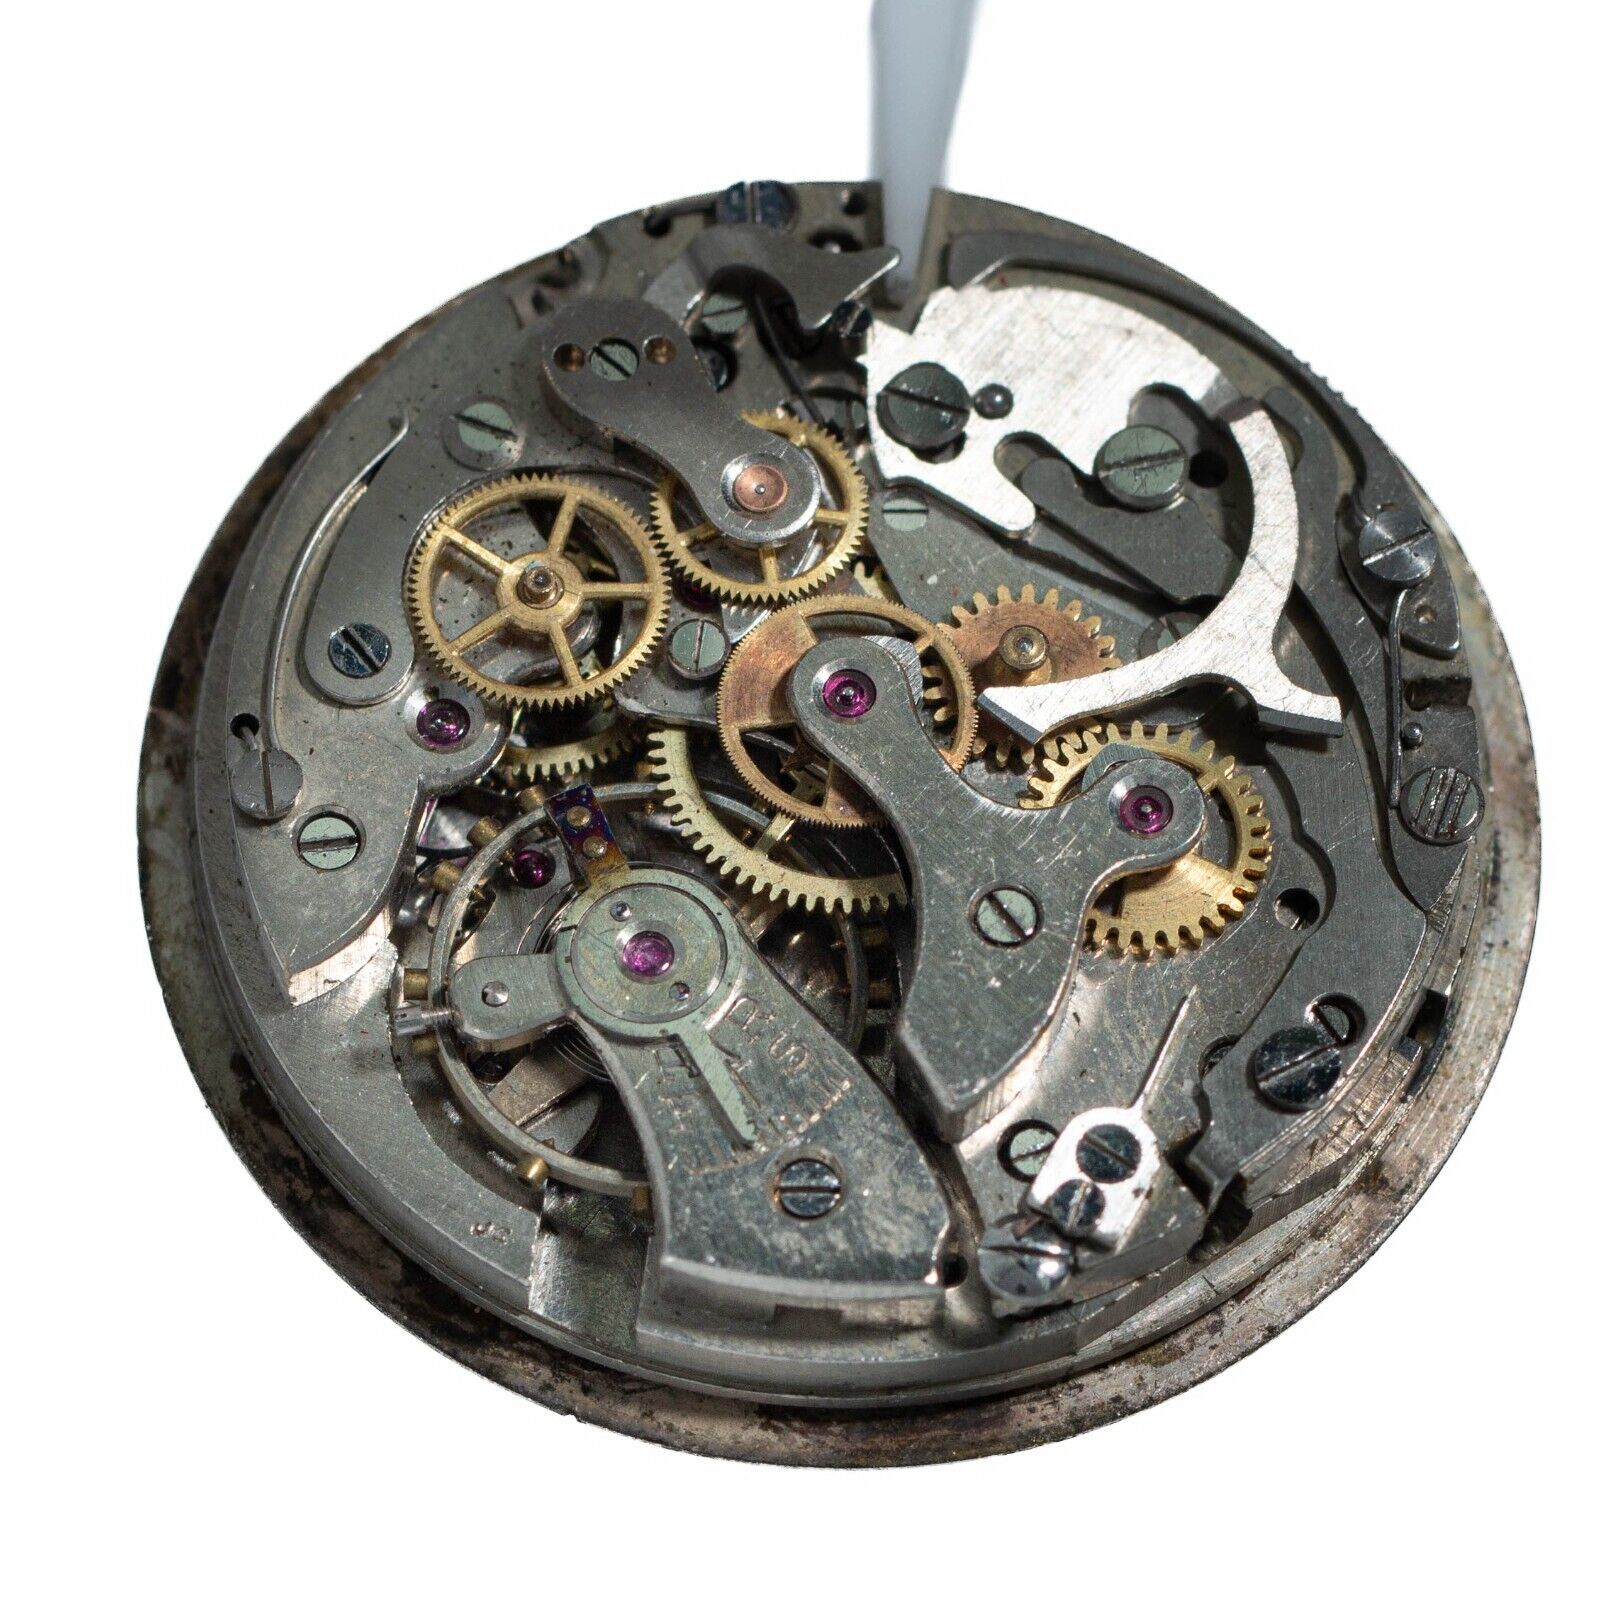 Muverans Landeron 48 Swiss 17 Jewels Chronograph Manual Wind Watch Movement Gallery Image 0